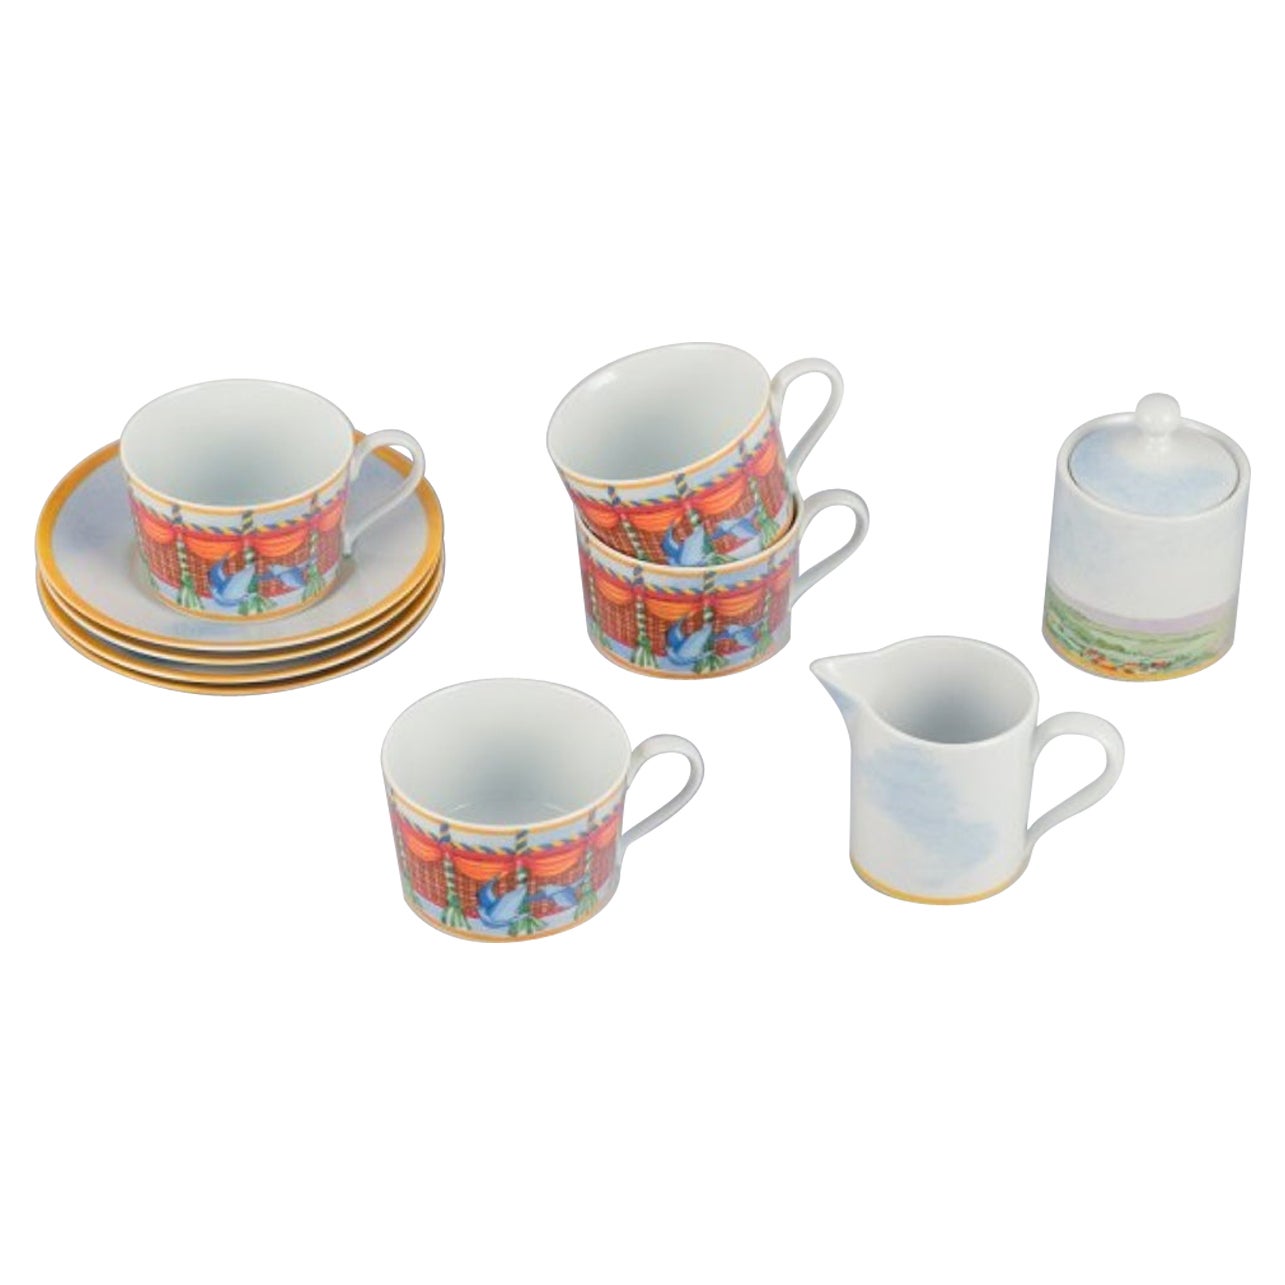 Williams-Sonoma Fine Porcelain. A four-person Montgolfiére coffee set For Sale